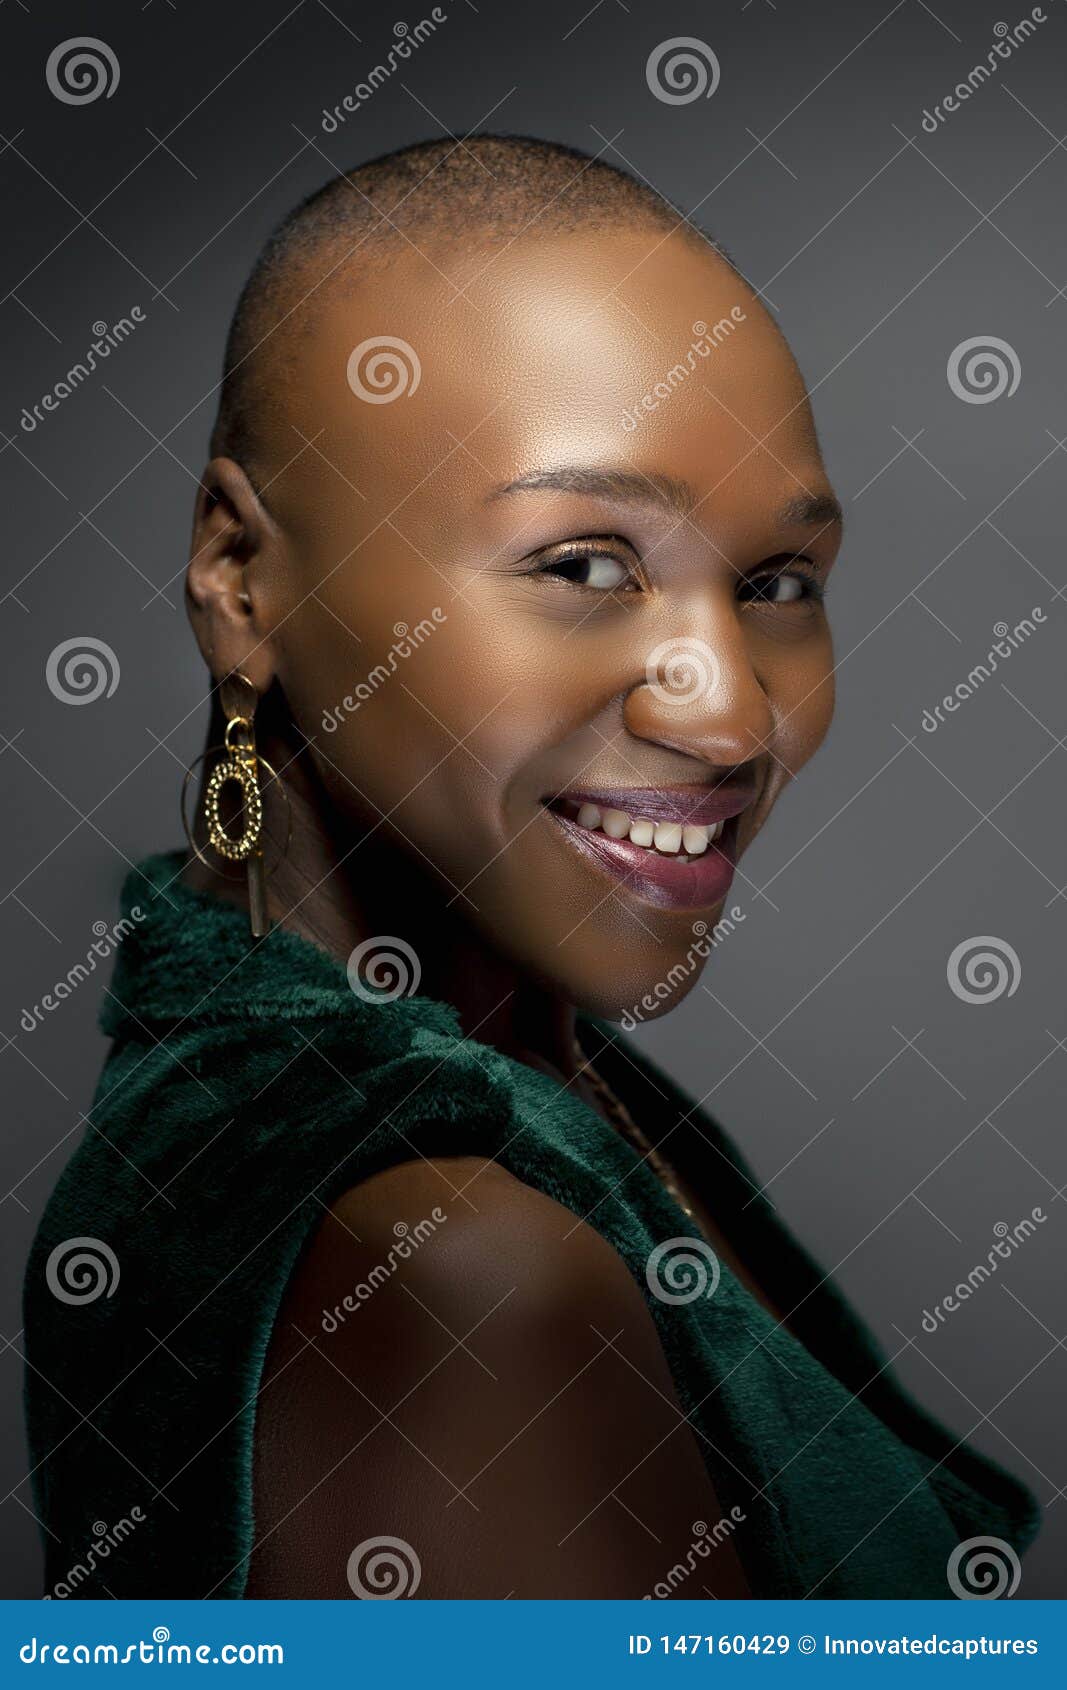 Female Fashion Model with Bald Hairstyle Stock Image - Image of confidence,  beautiful: 147160429